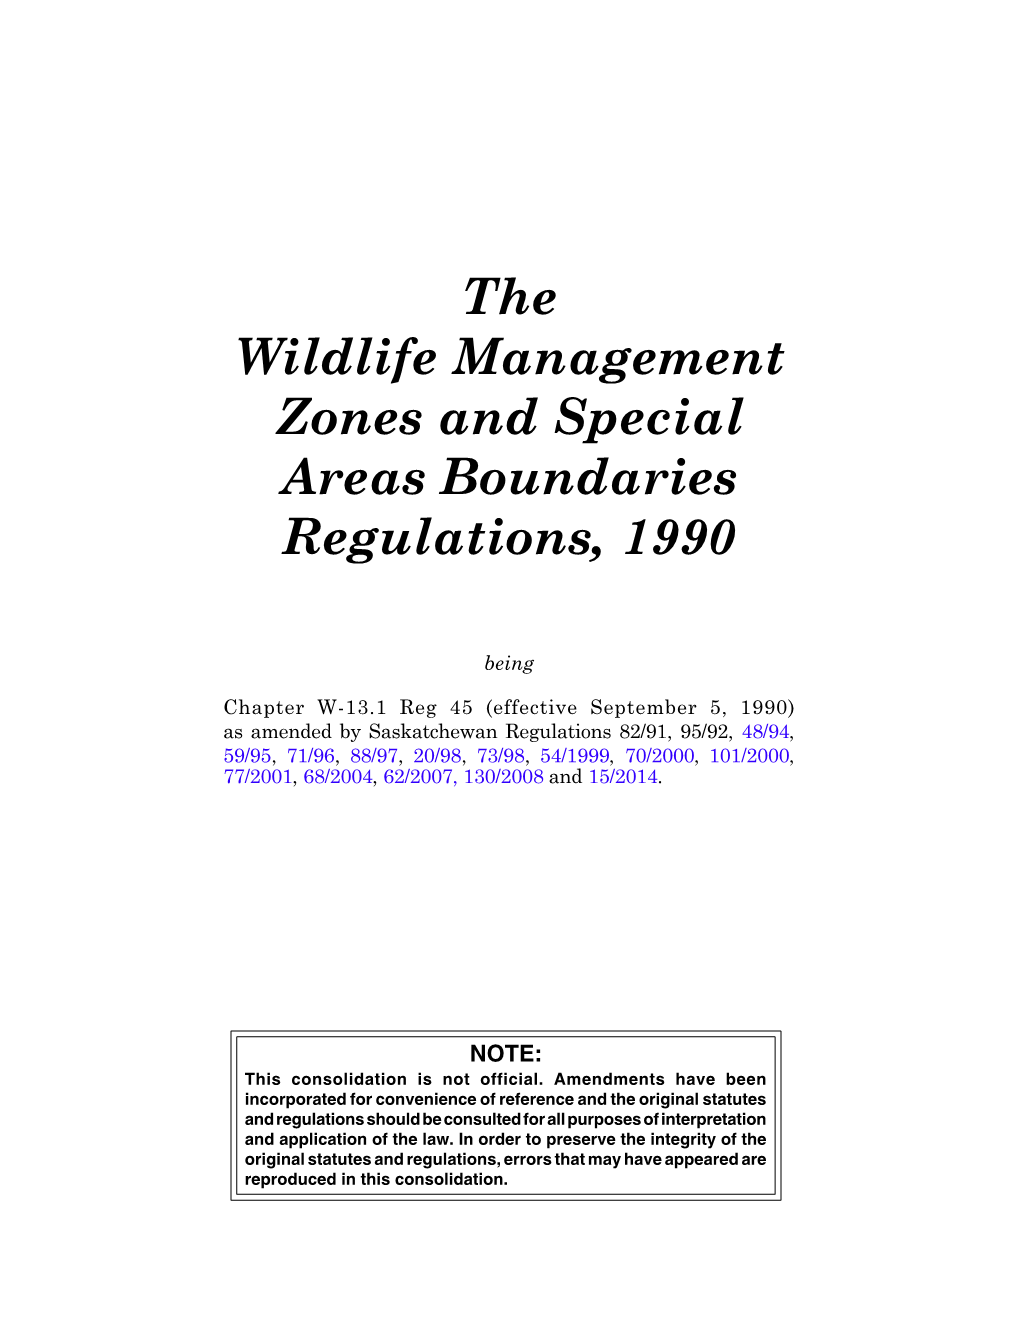 Wildlife Management Zones and Special Areas Boundaries Regulations, 1990